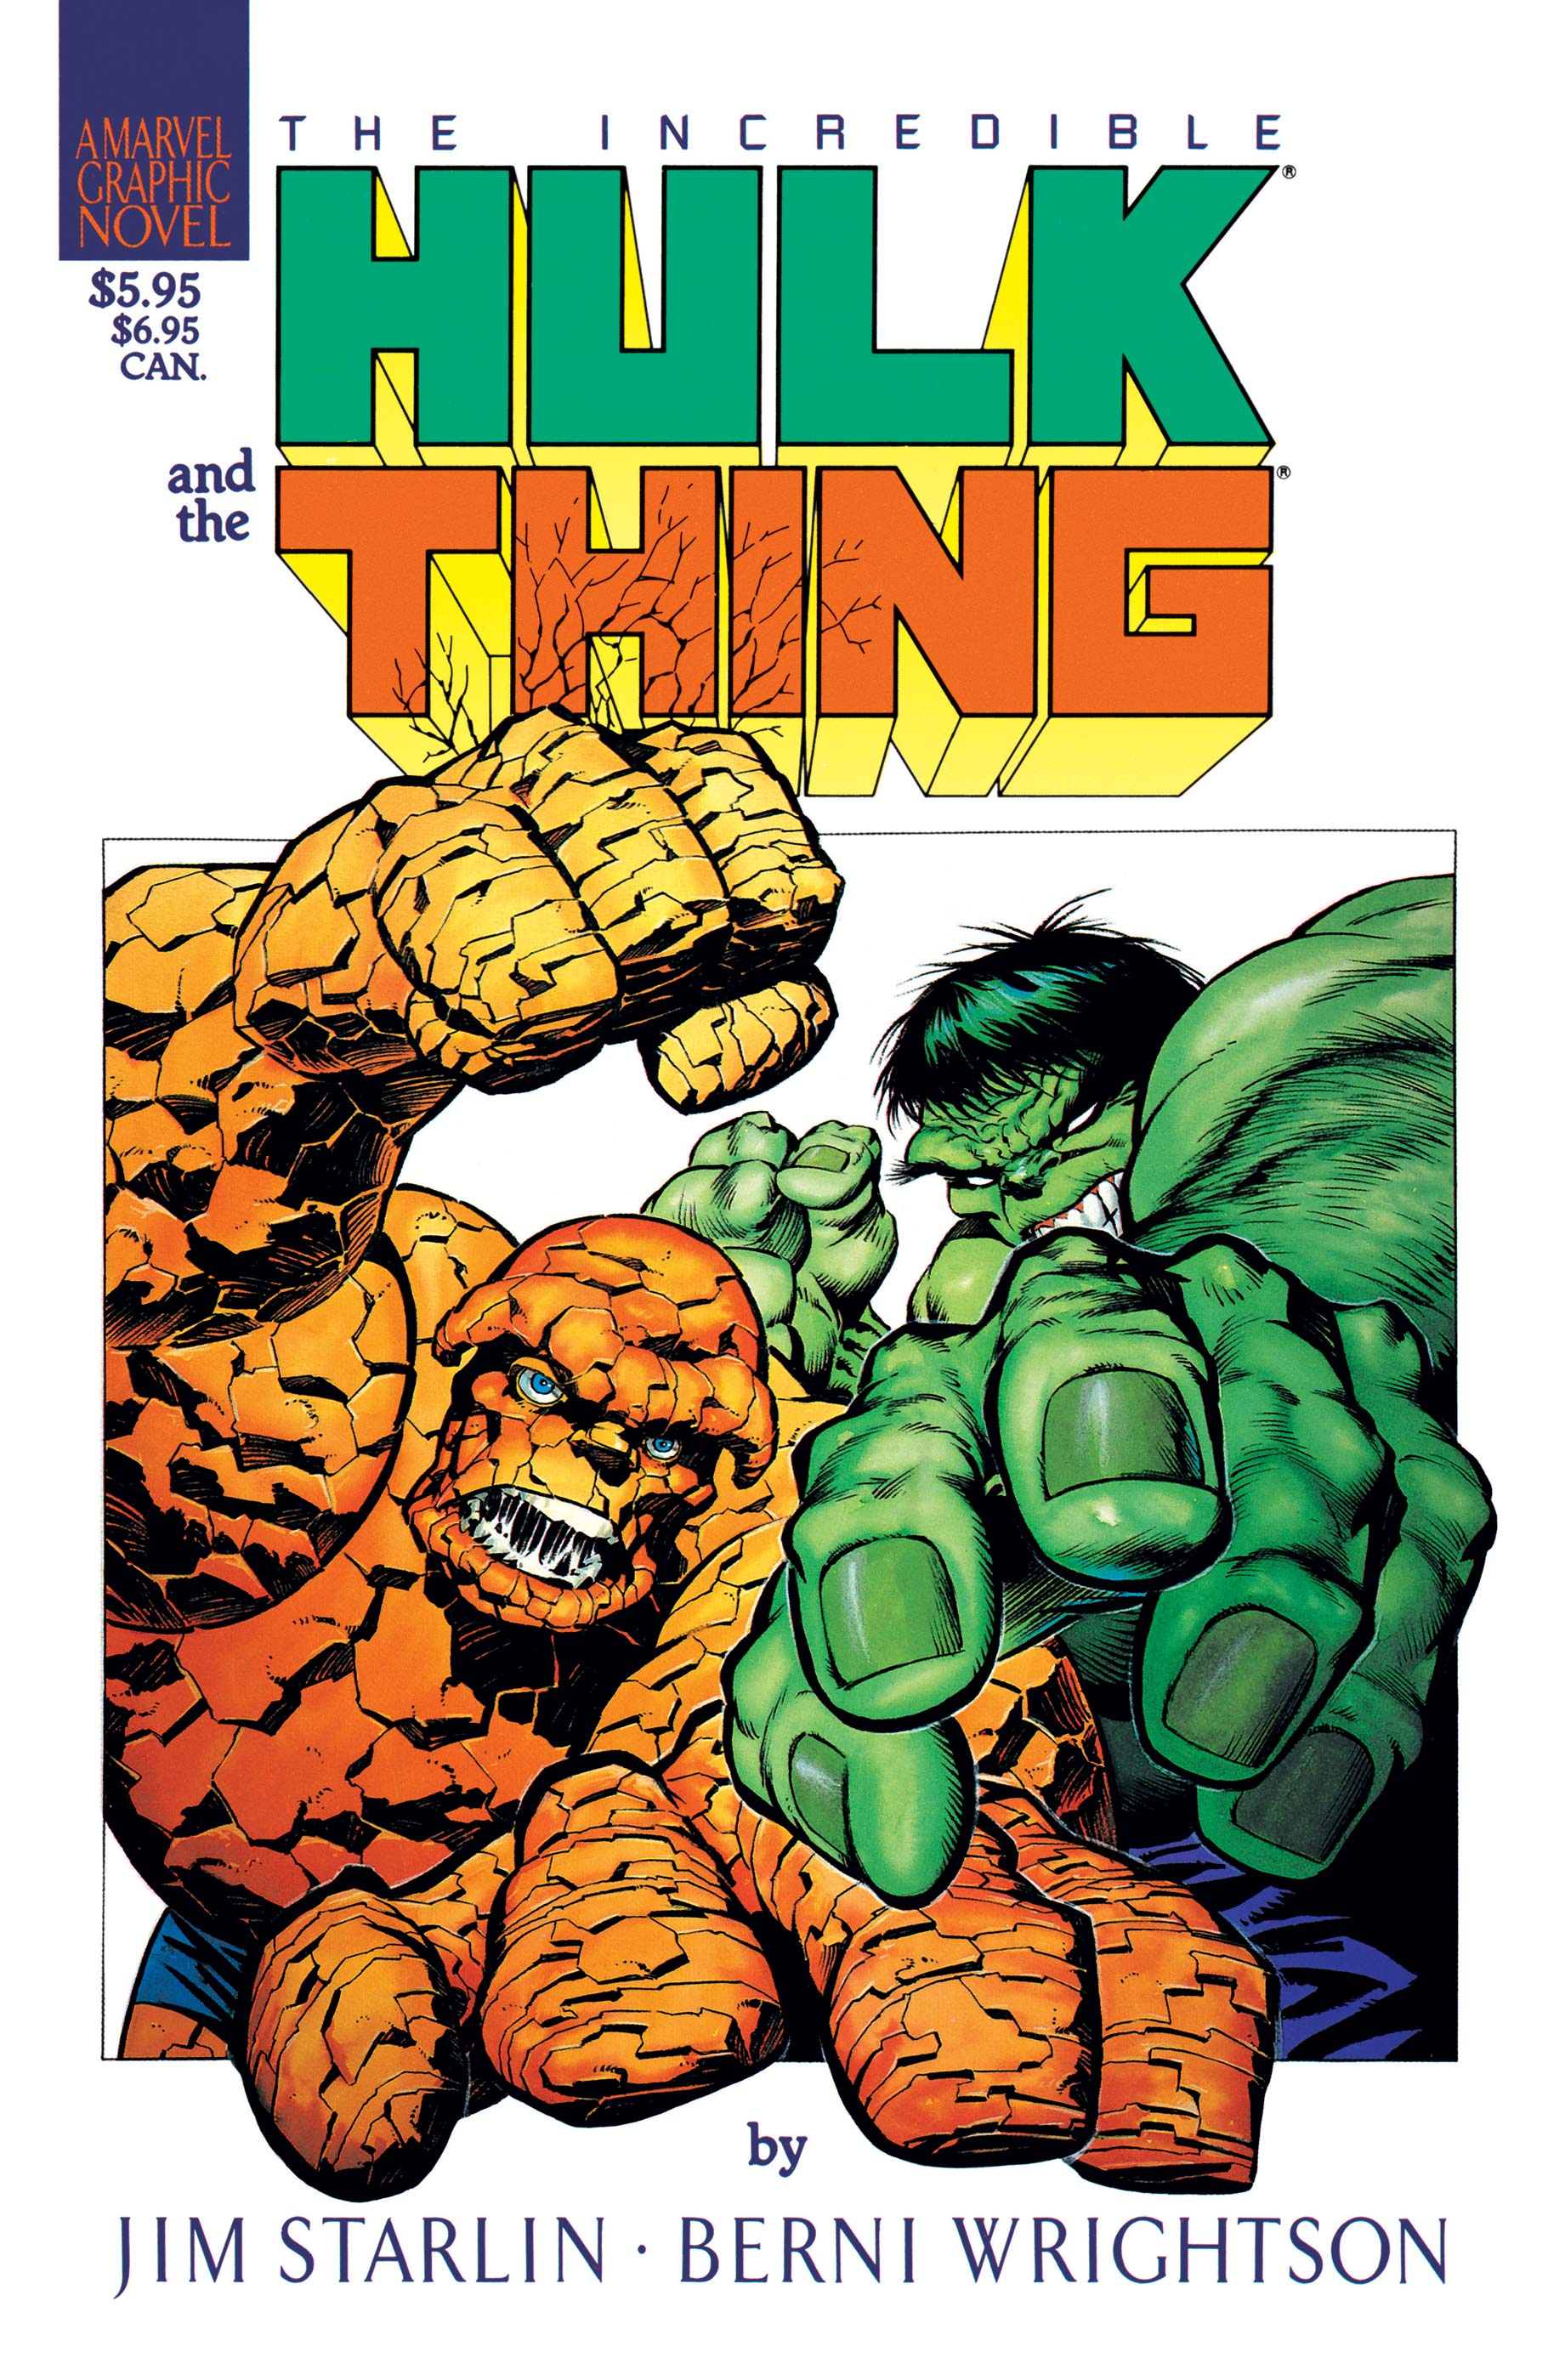 Hulk/Thing - The Big Change (1982)